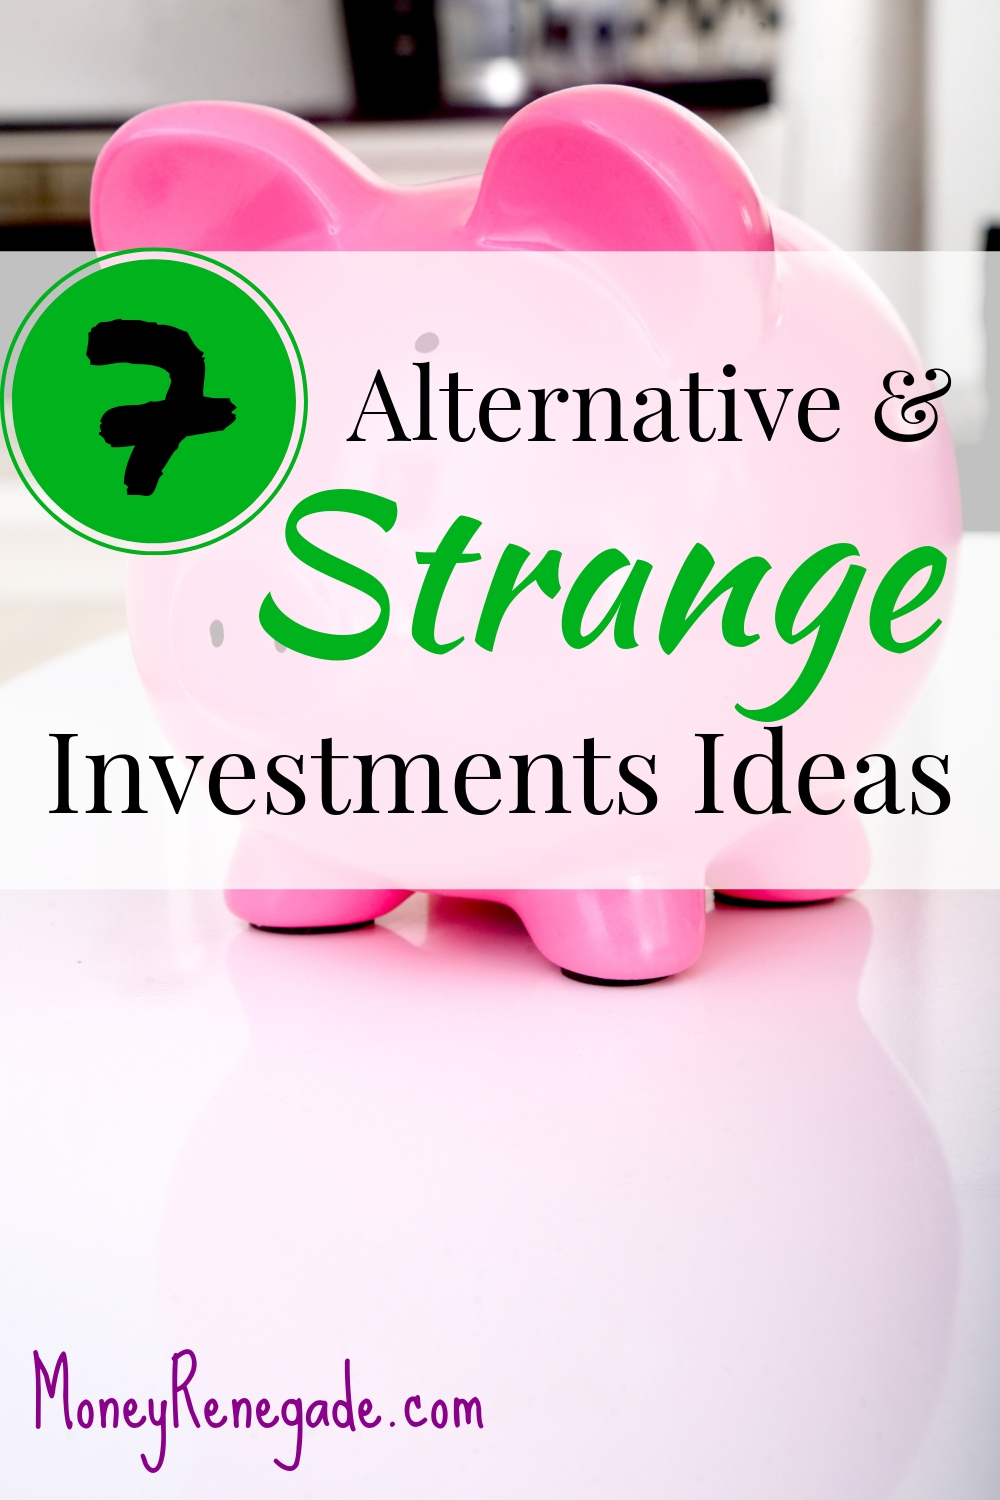 7 Alternative and strange investment ideas